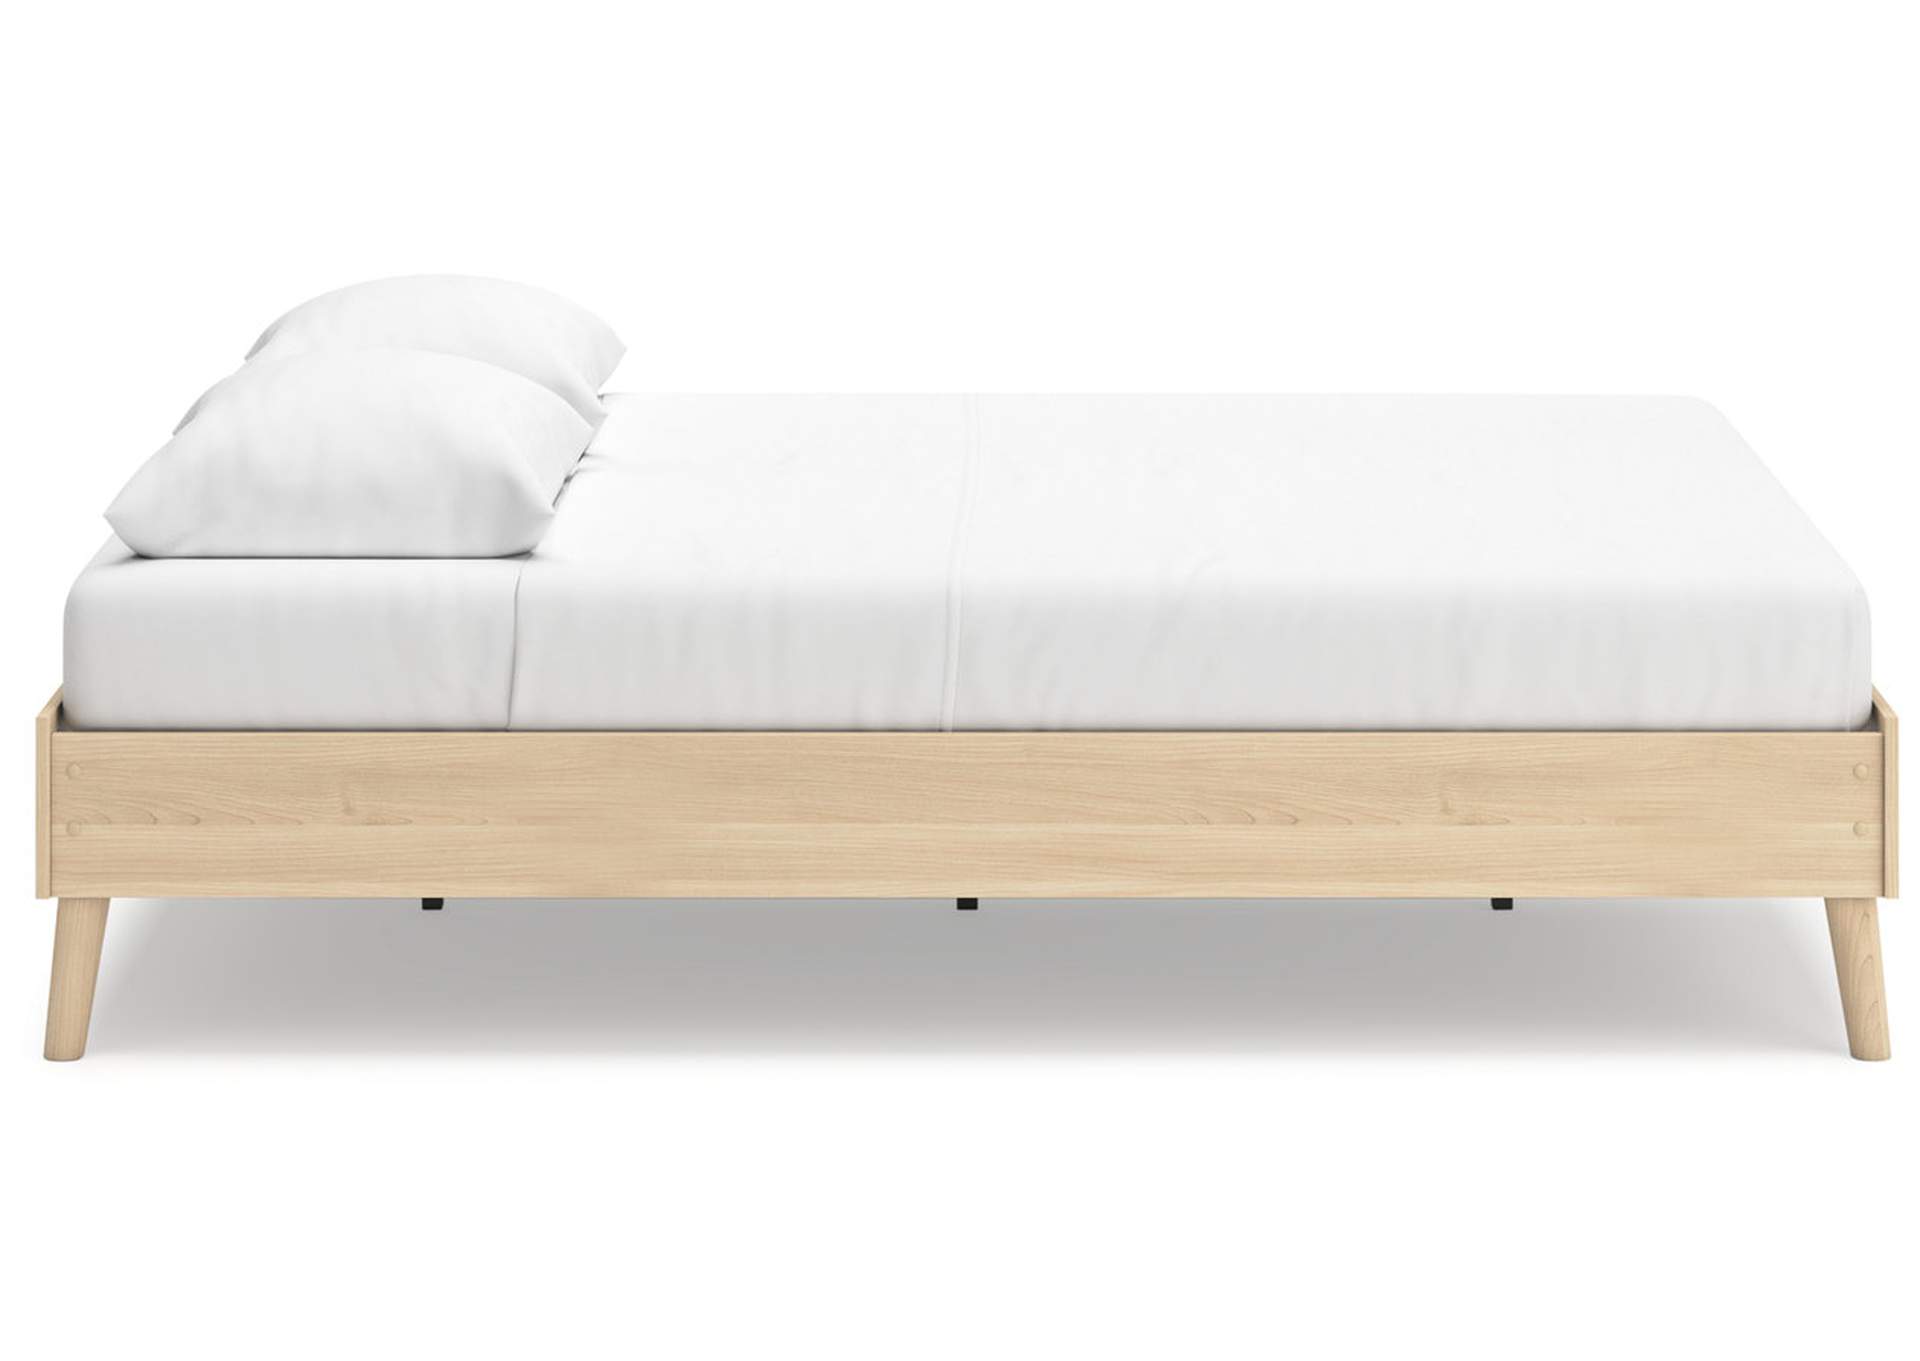 Cabinella Queen Platform Bed,Signature Design By Ashley